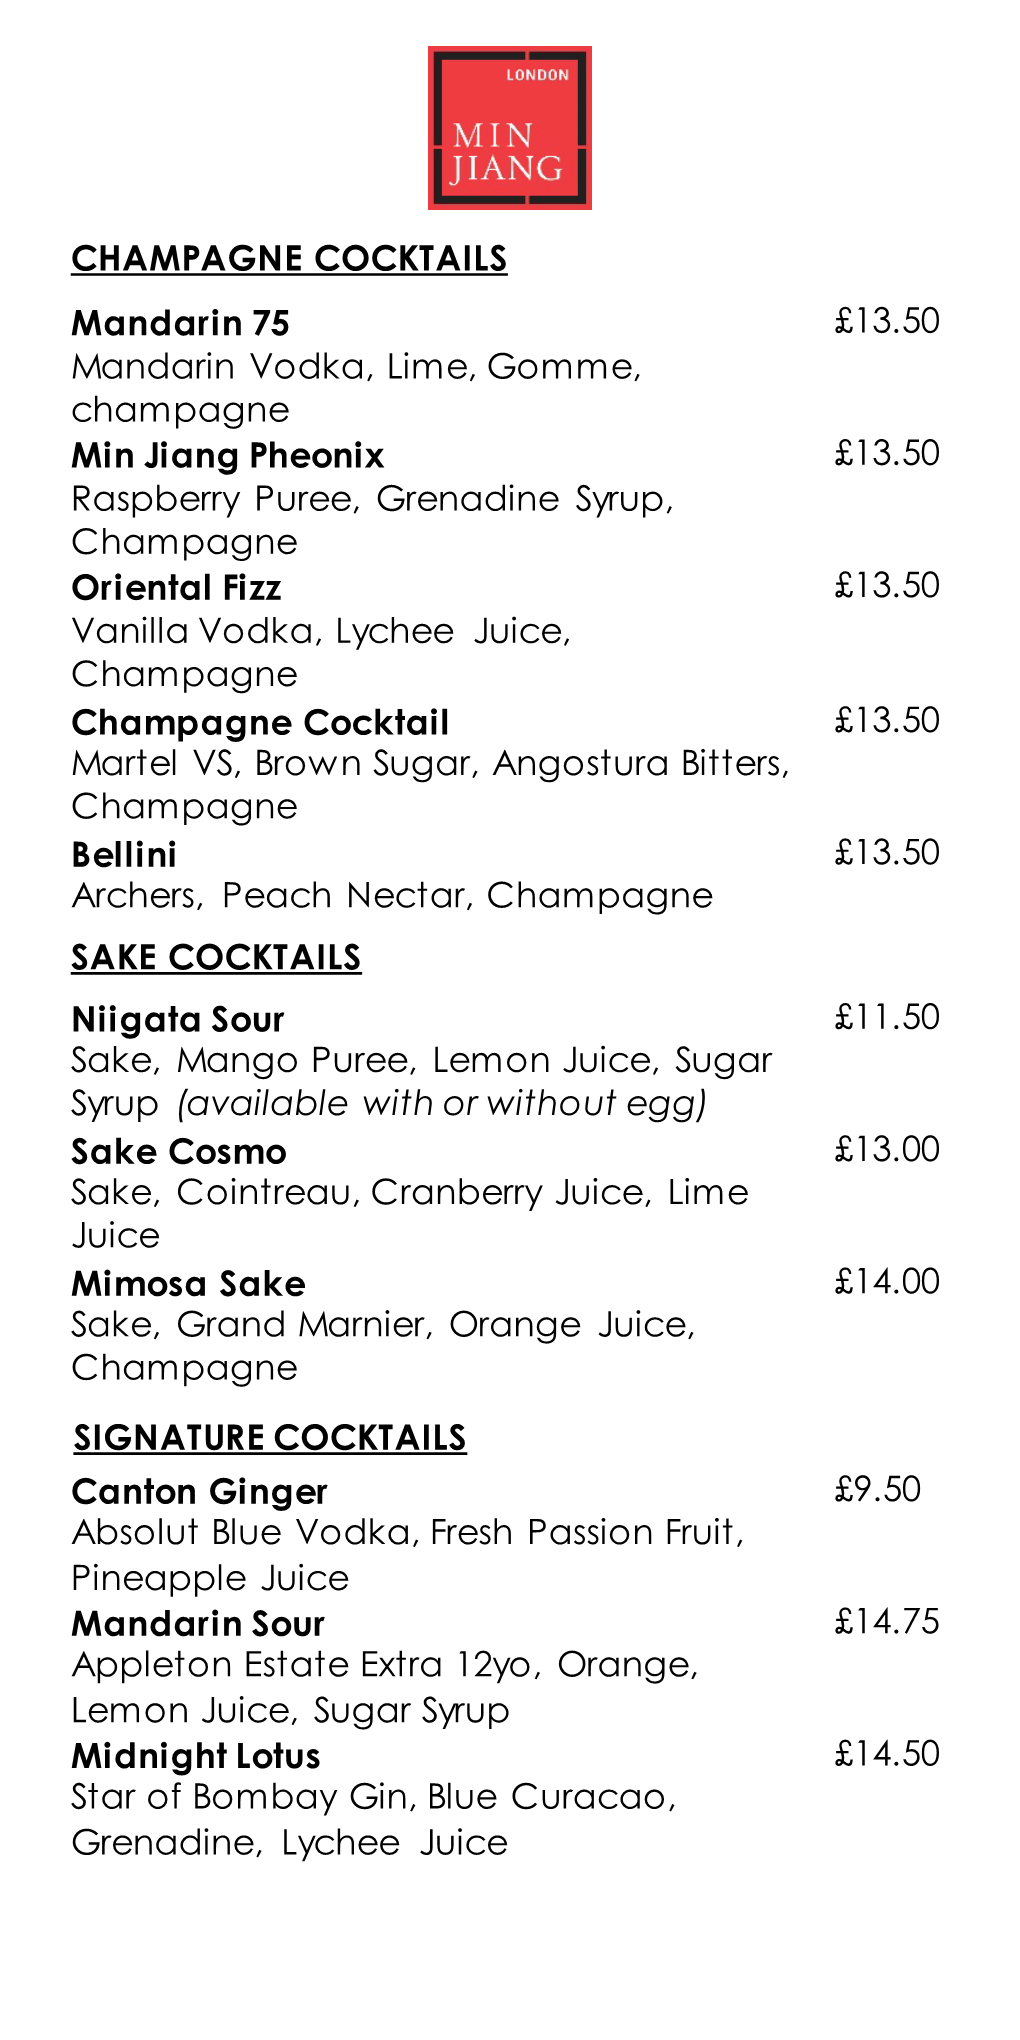 Mandarin 75 Mandarin Vodka, Lime, Gomme, Champagne £13.50 Min